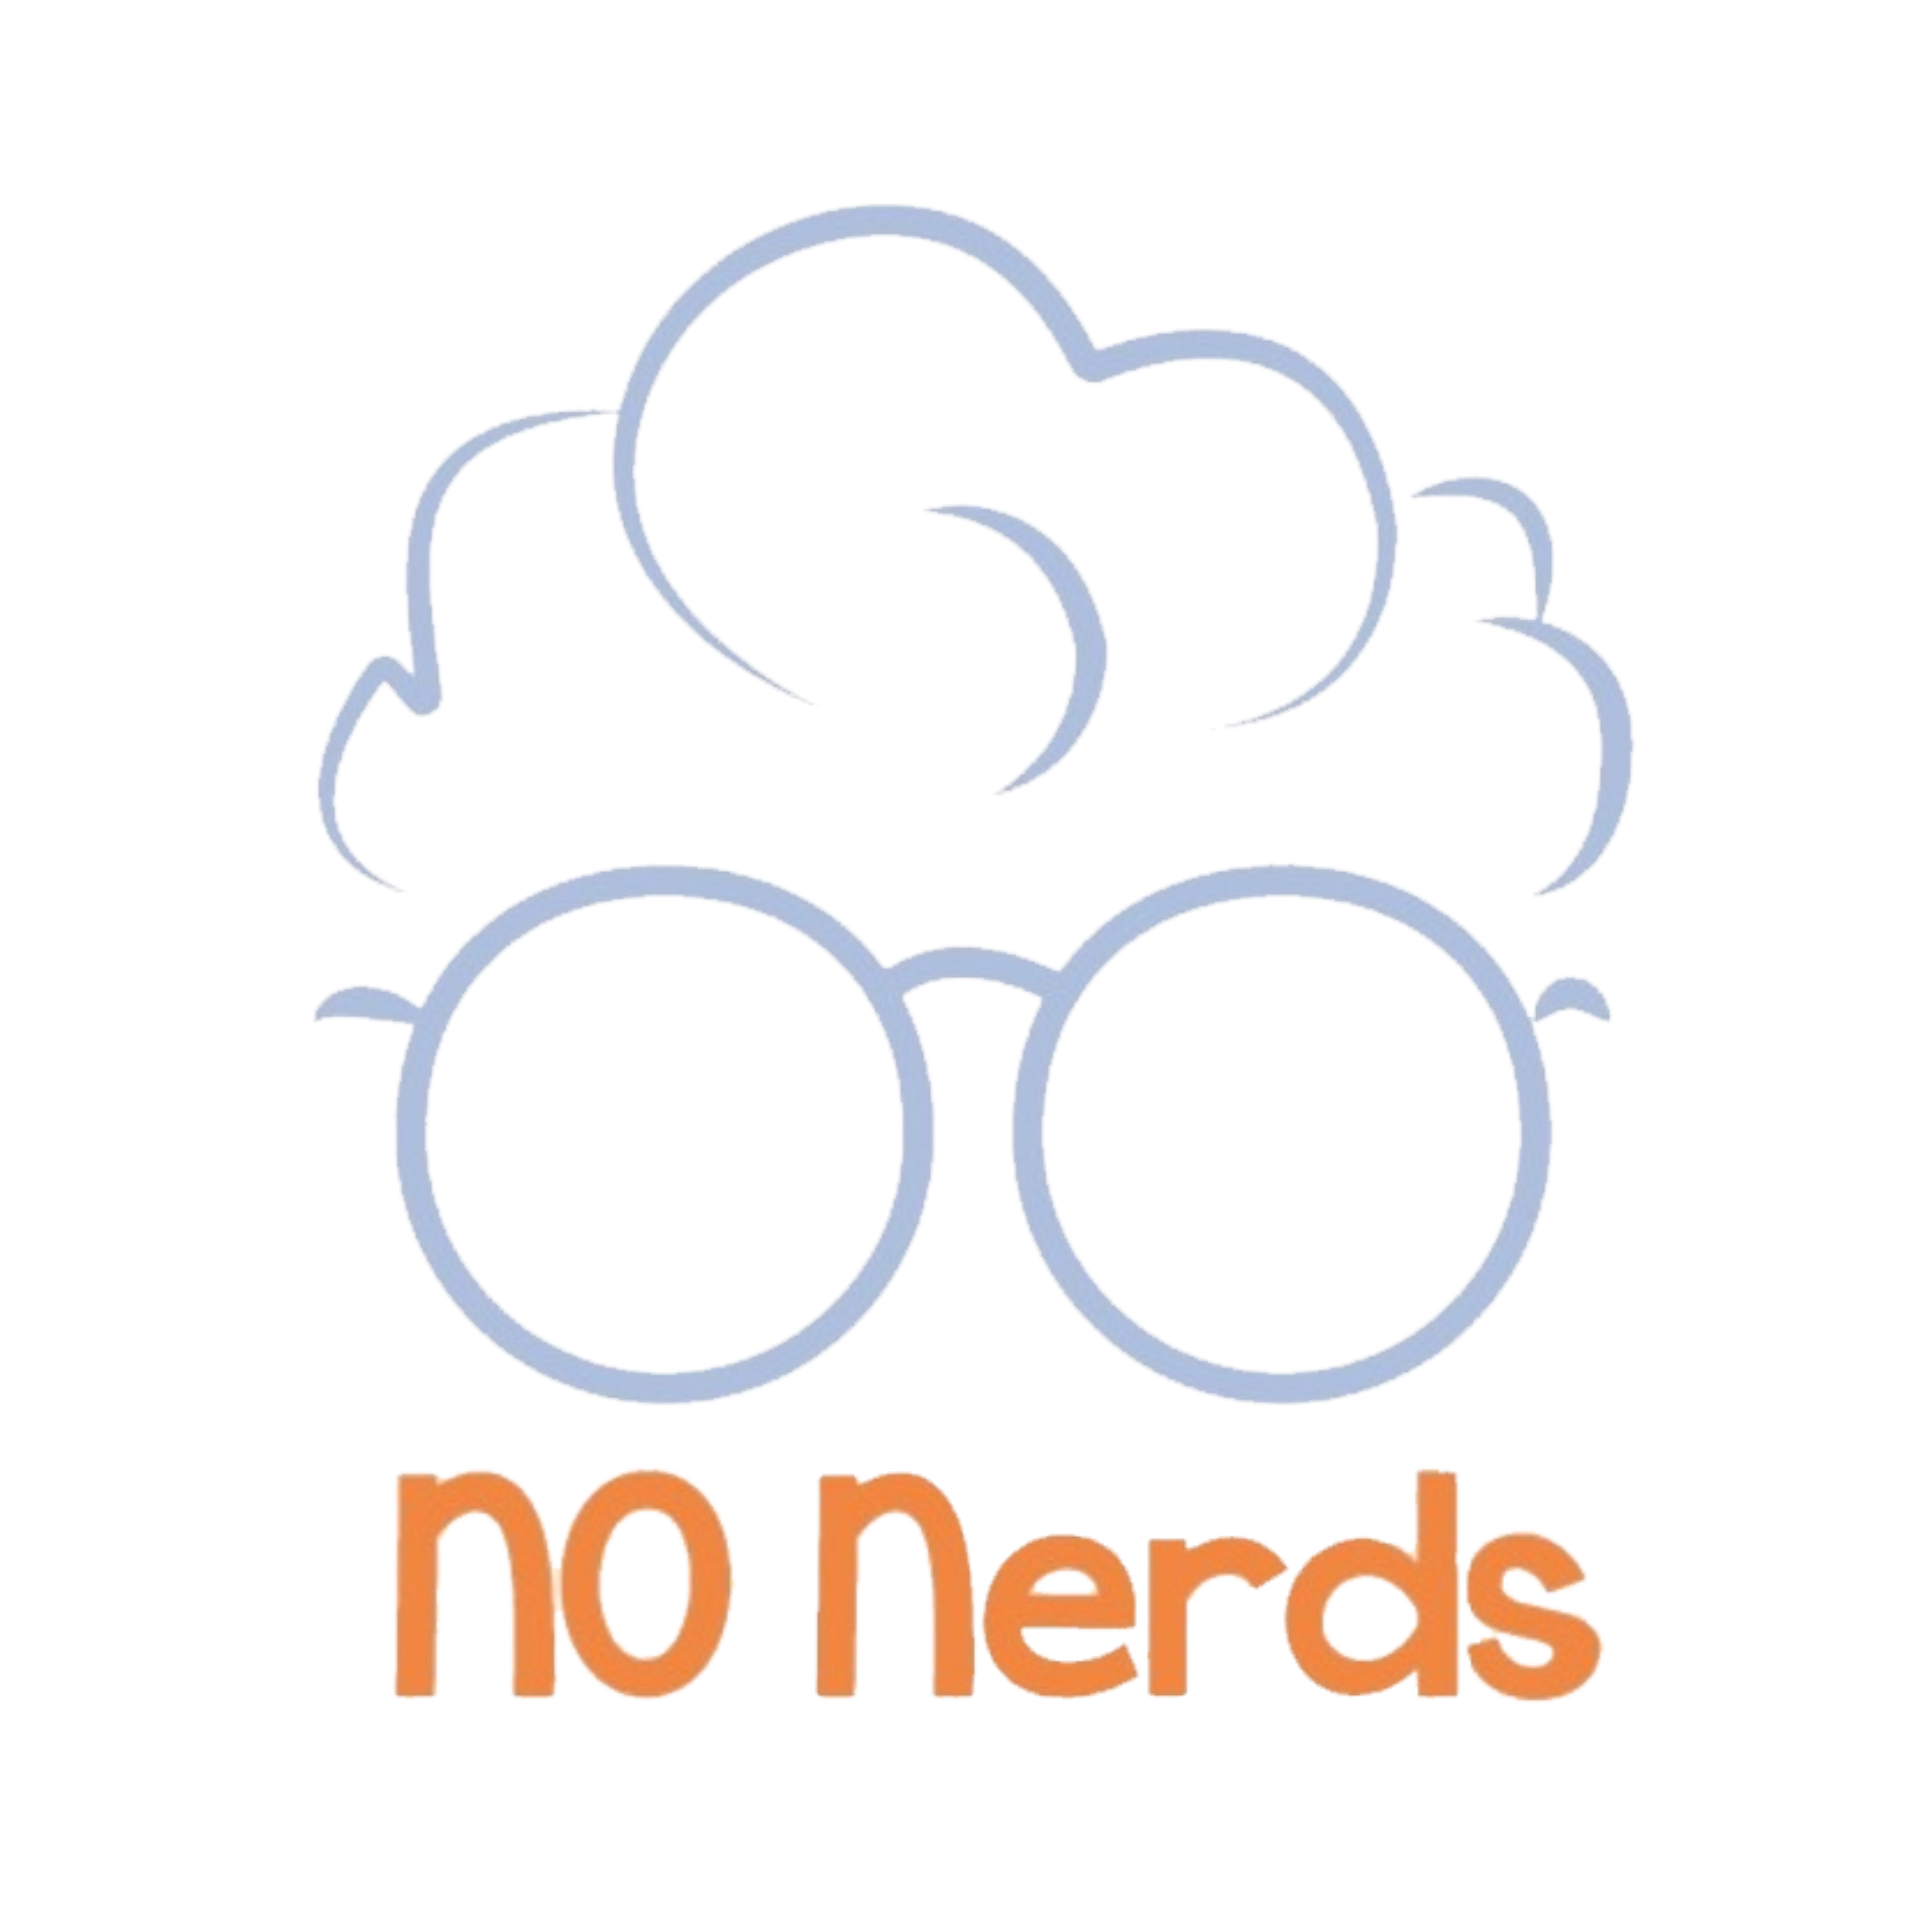 no nerds.png